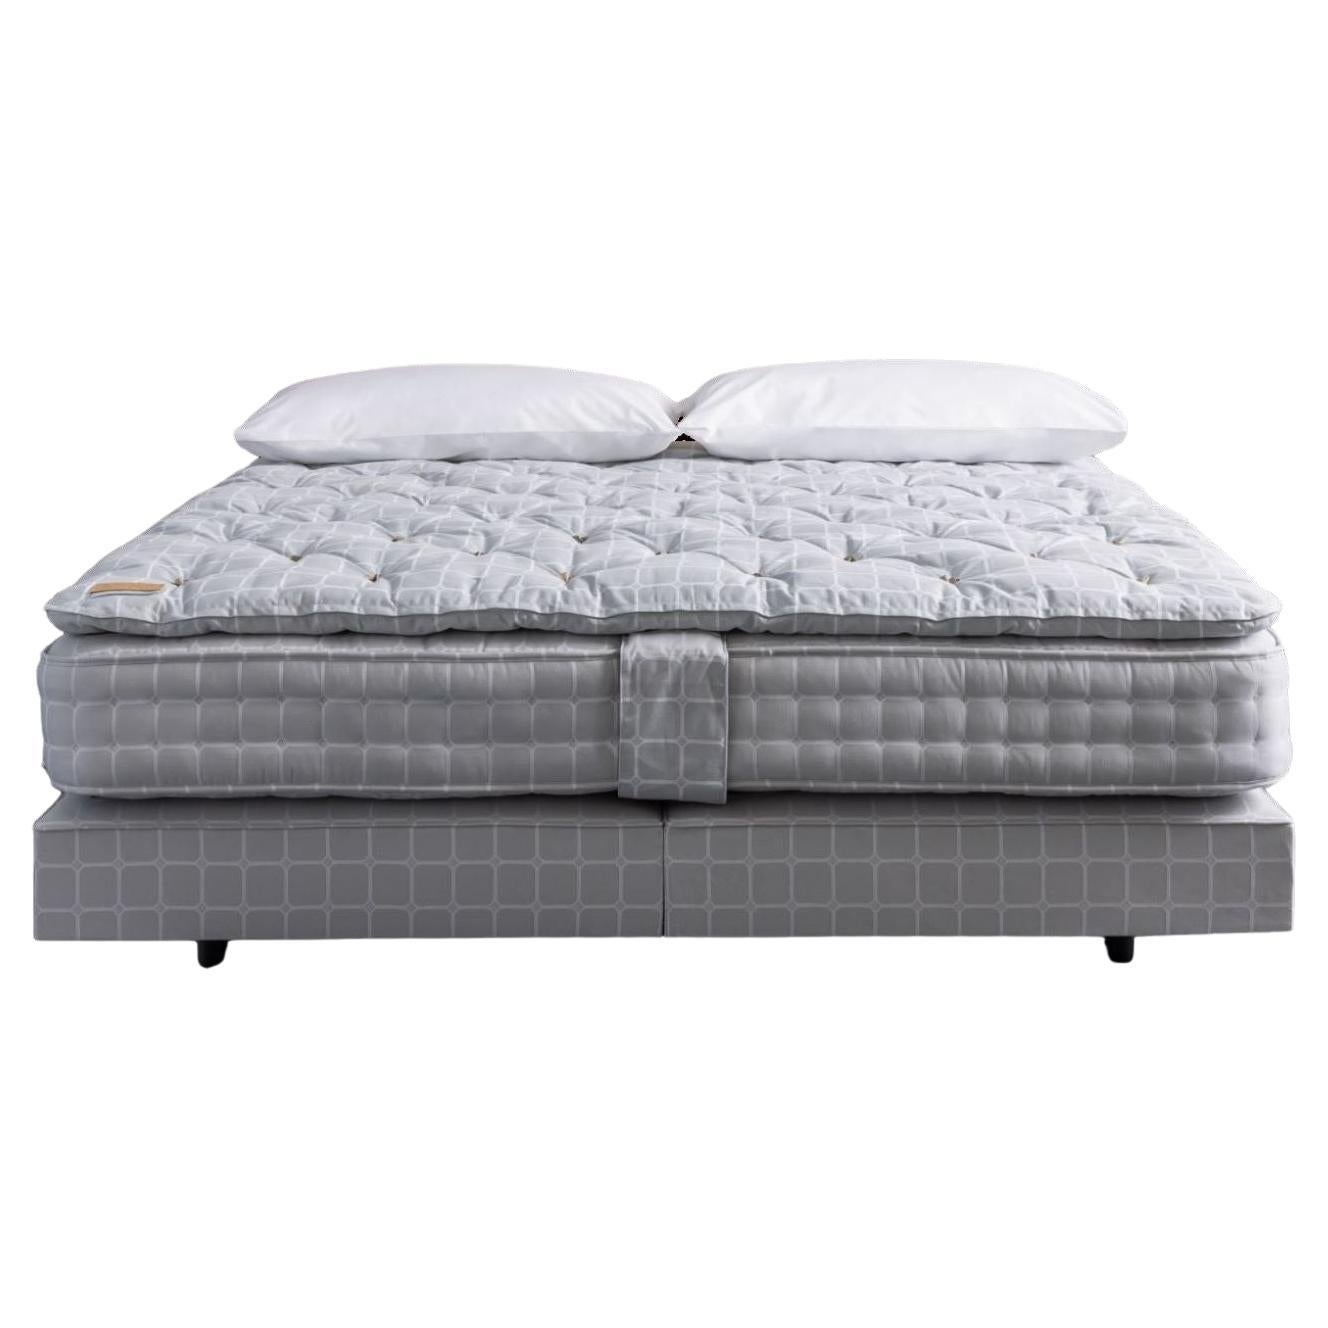 Savoir Nº5 Bed Set, Handmade to Order, US California King Size